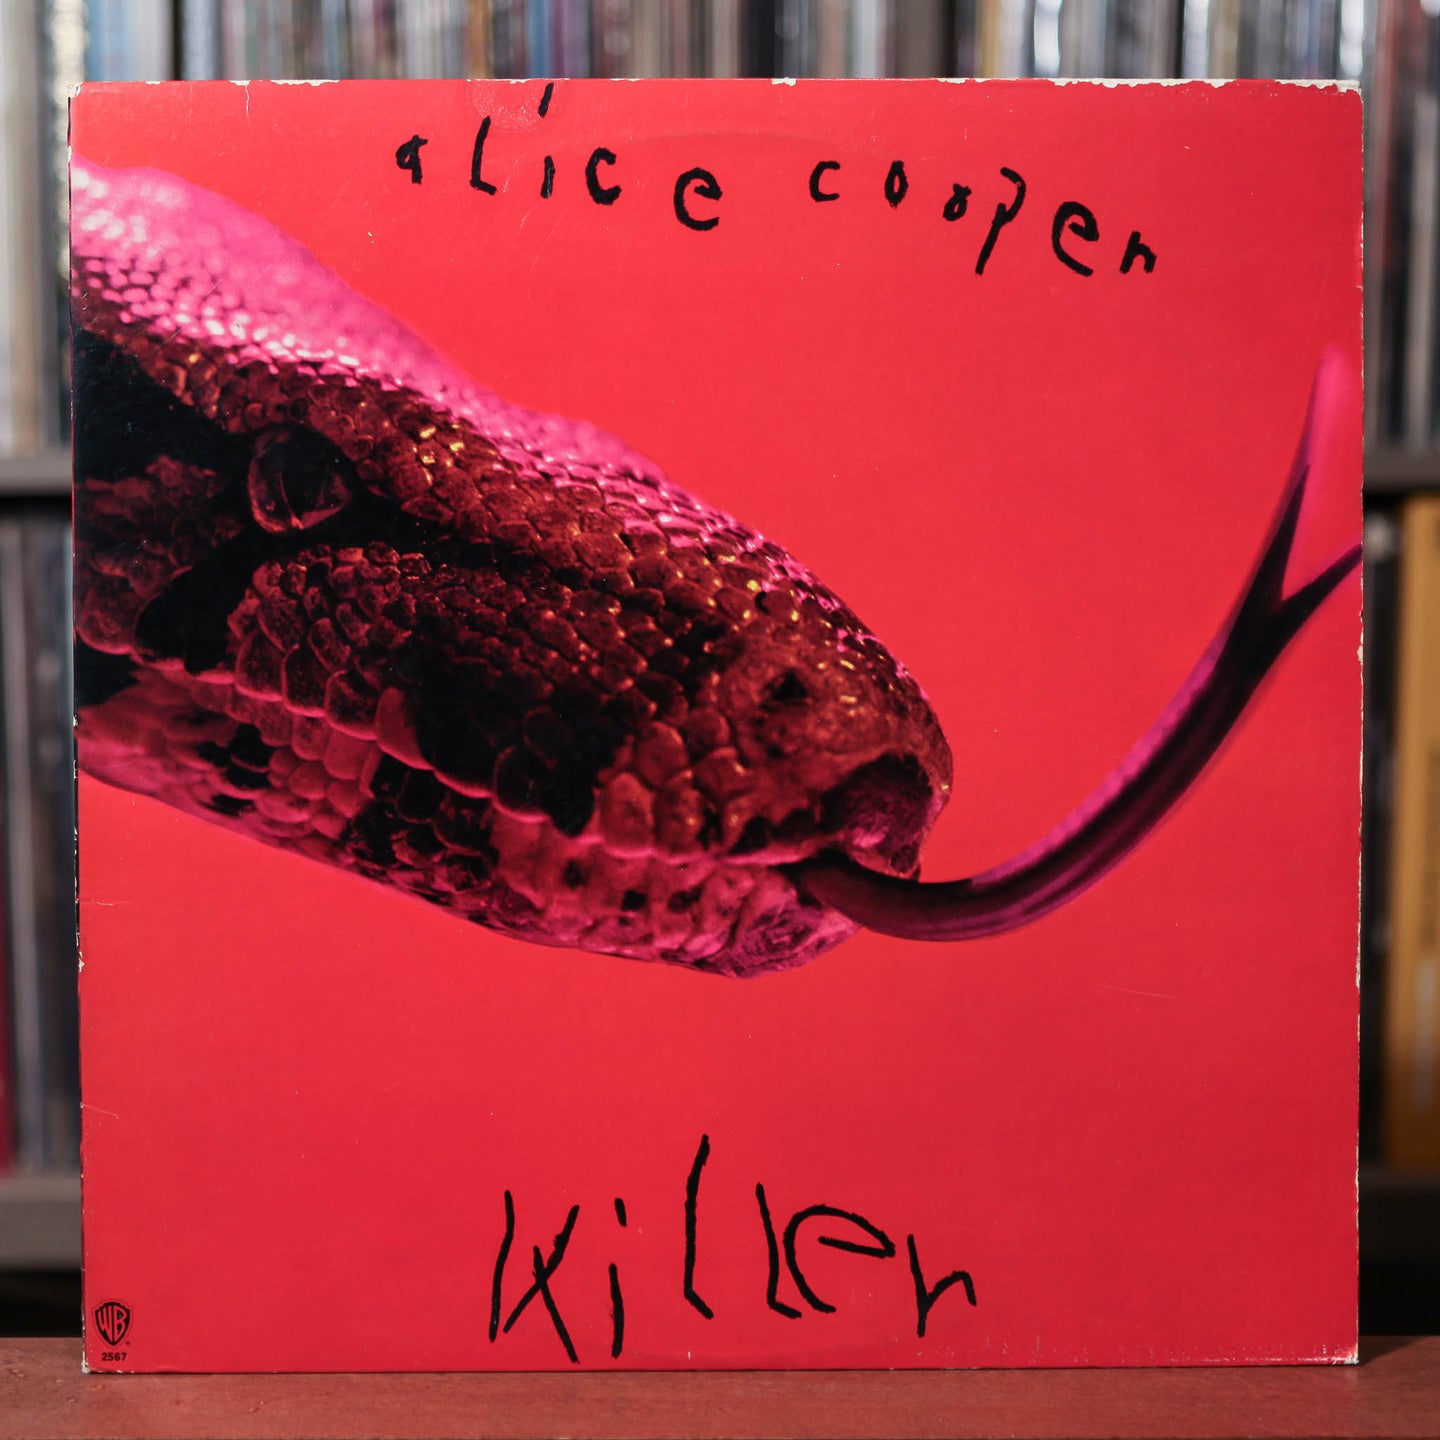 Alice Cooper - Killer - 1976 Warner, VG/VG+